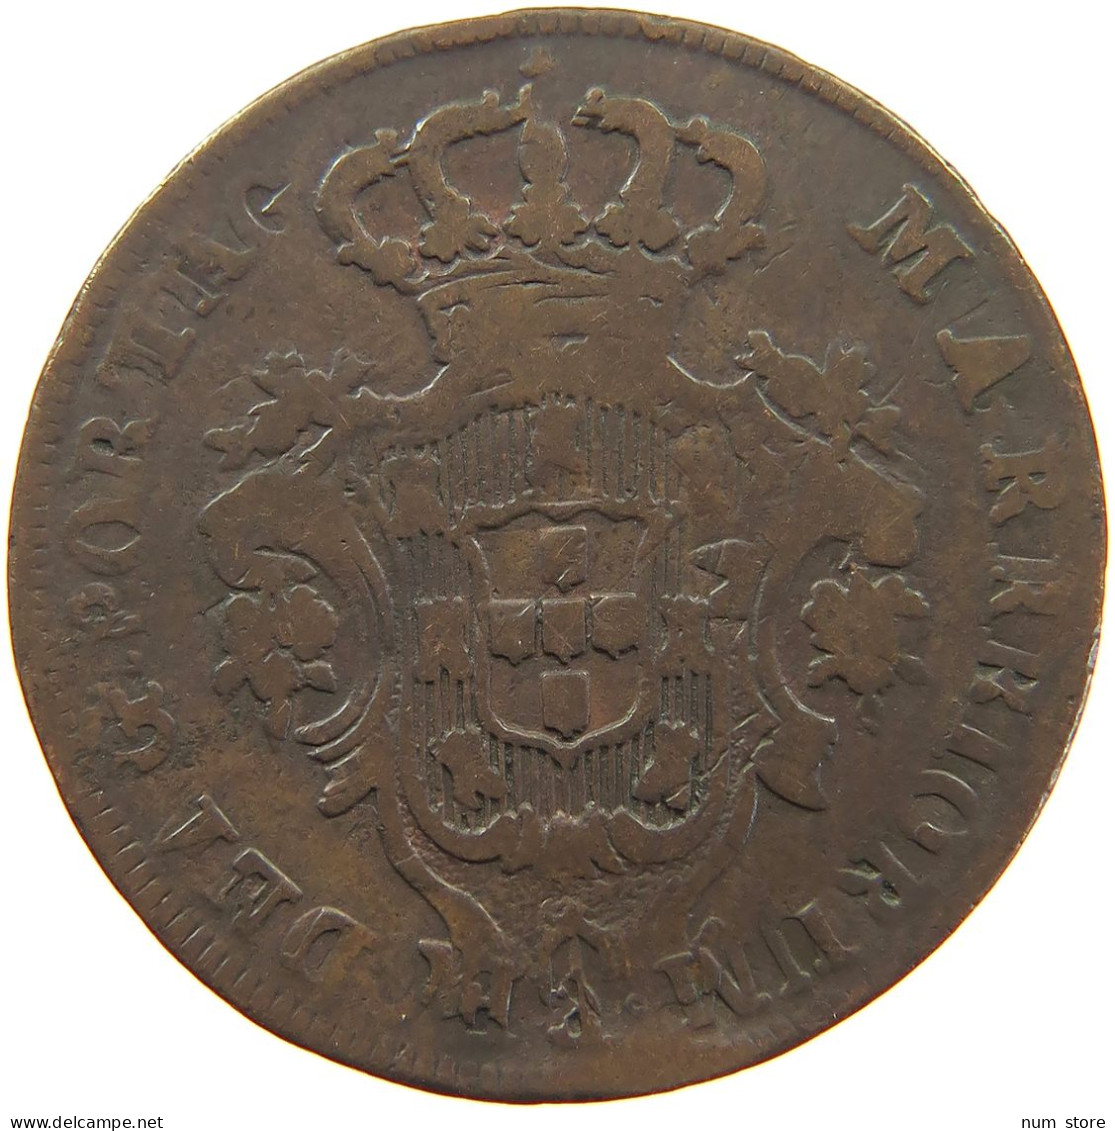 AZORES 10 REIS 1799 Maria I. (1786-1799) BOTH SIDES OVERSTUCK #t015 0579 - Açores